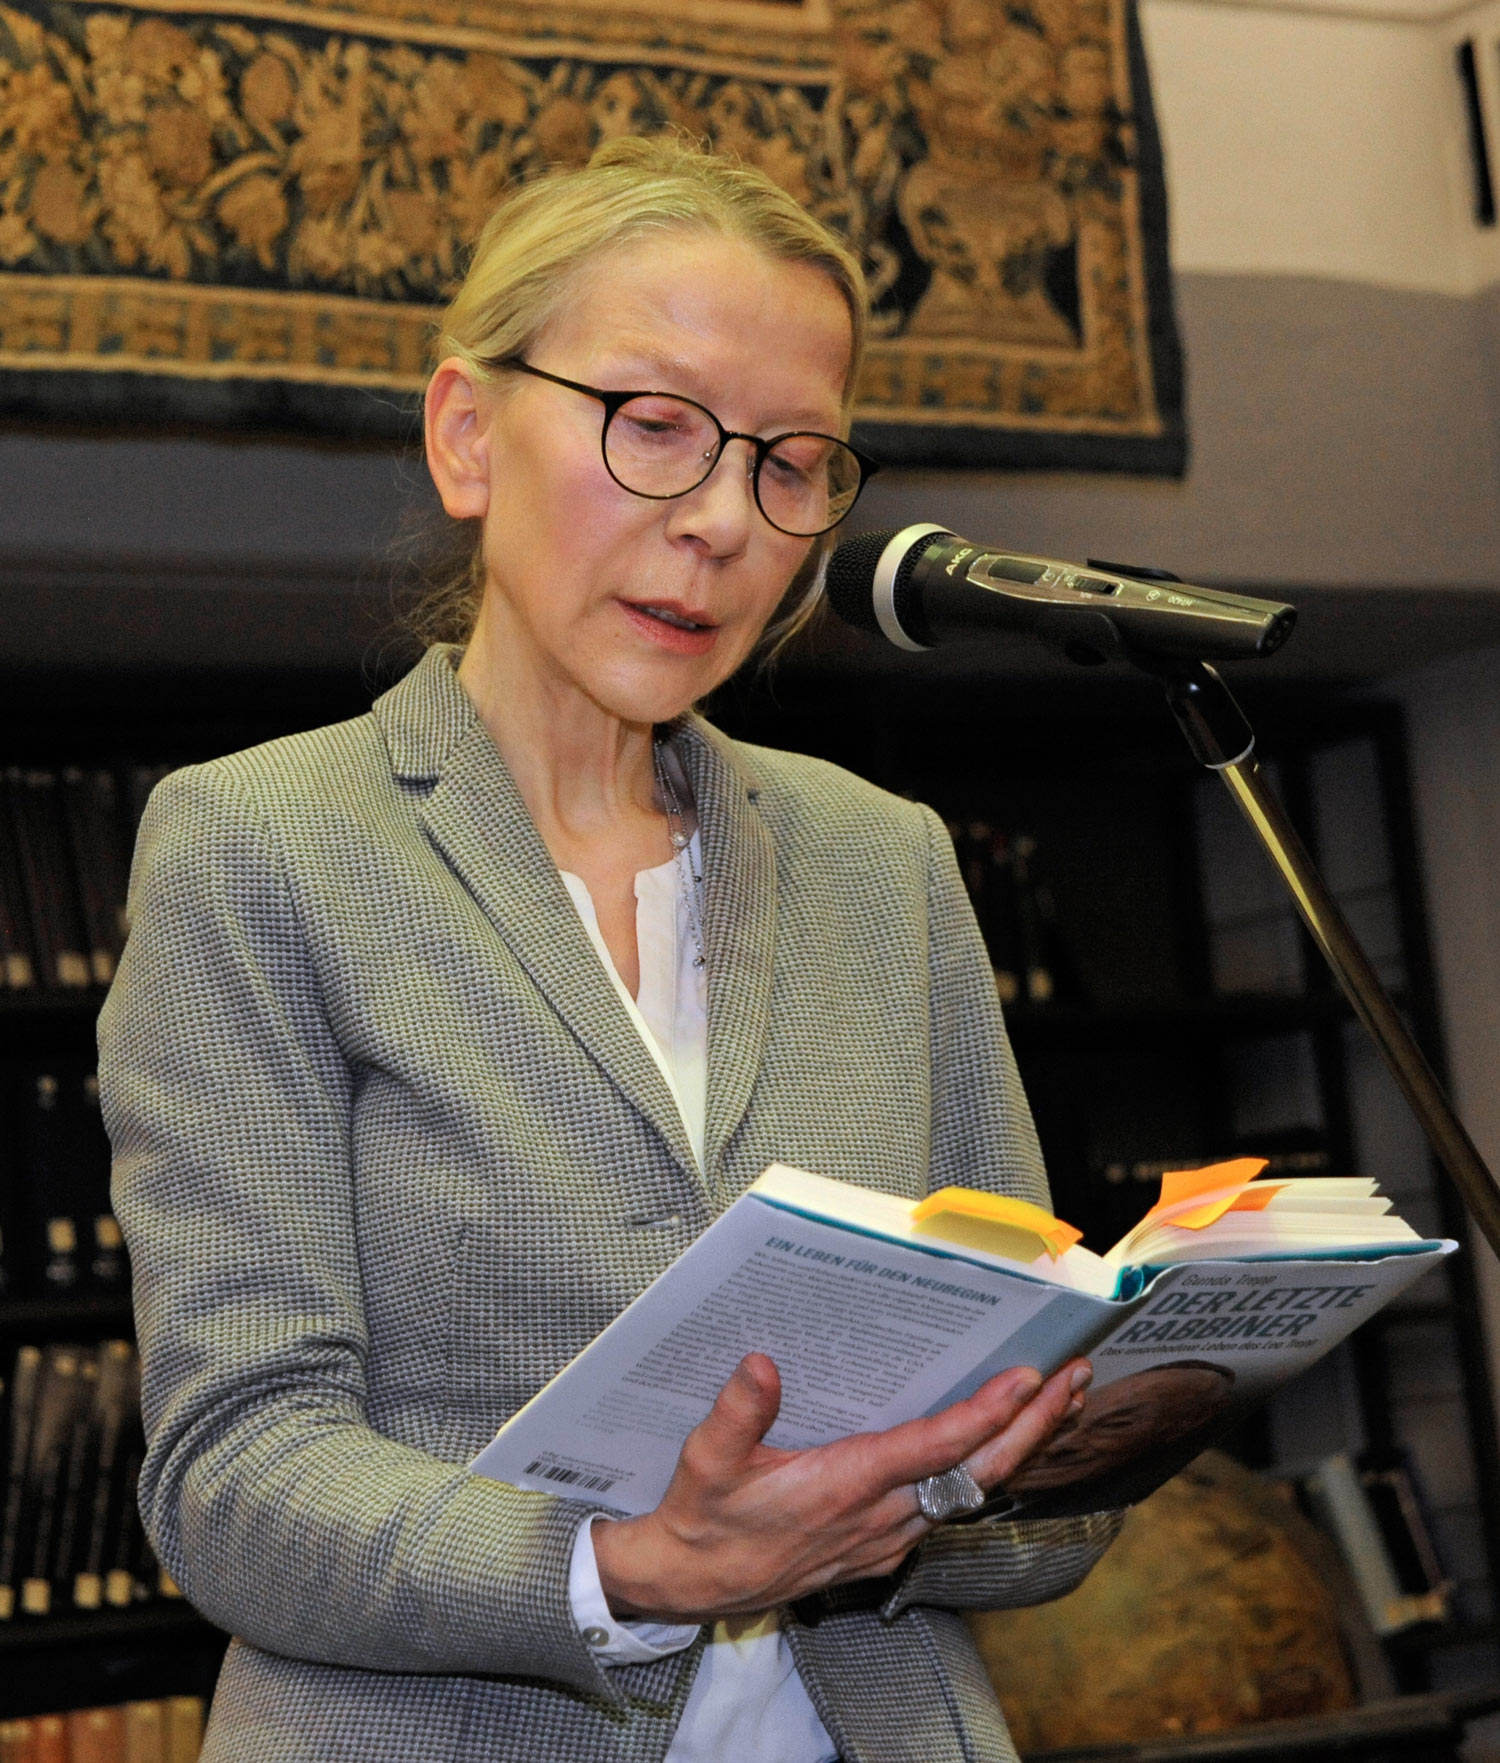 A photo of Gunda Trepp reading at a podium